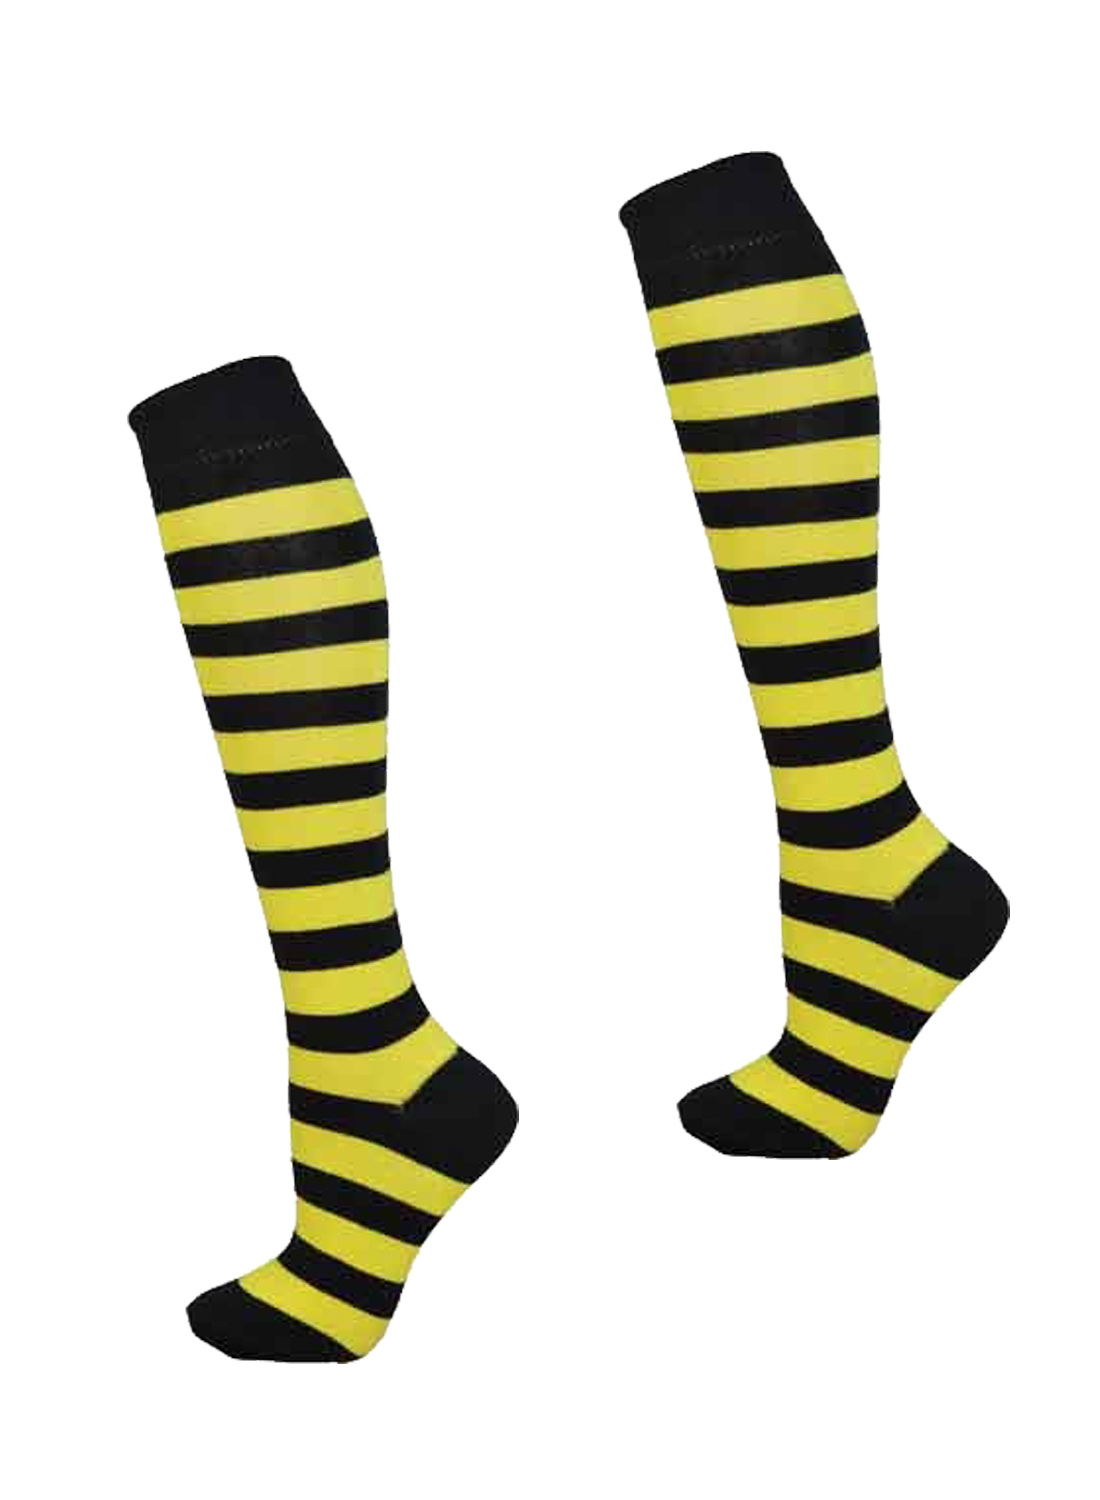 KH Socks Black Yellow Stripes